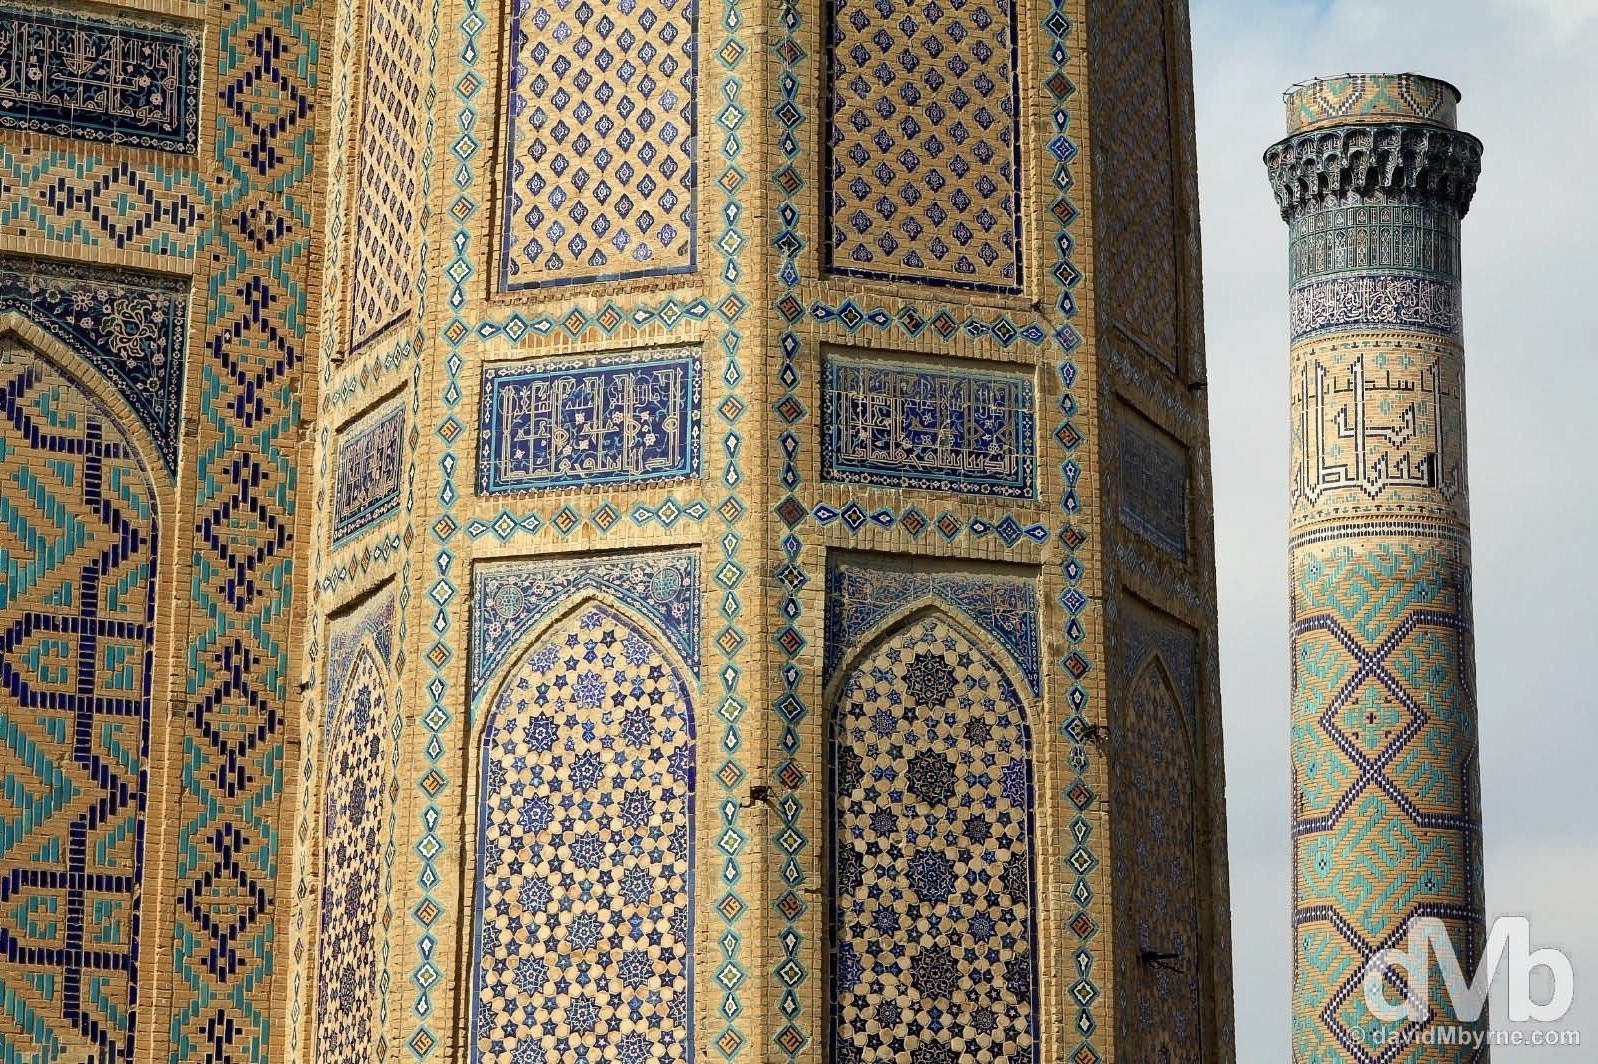 Tilework Detail On The Main Facade & Minaret Of The Bibi Khanym Mosque In Samarkand